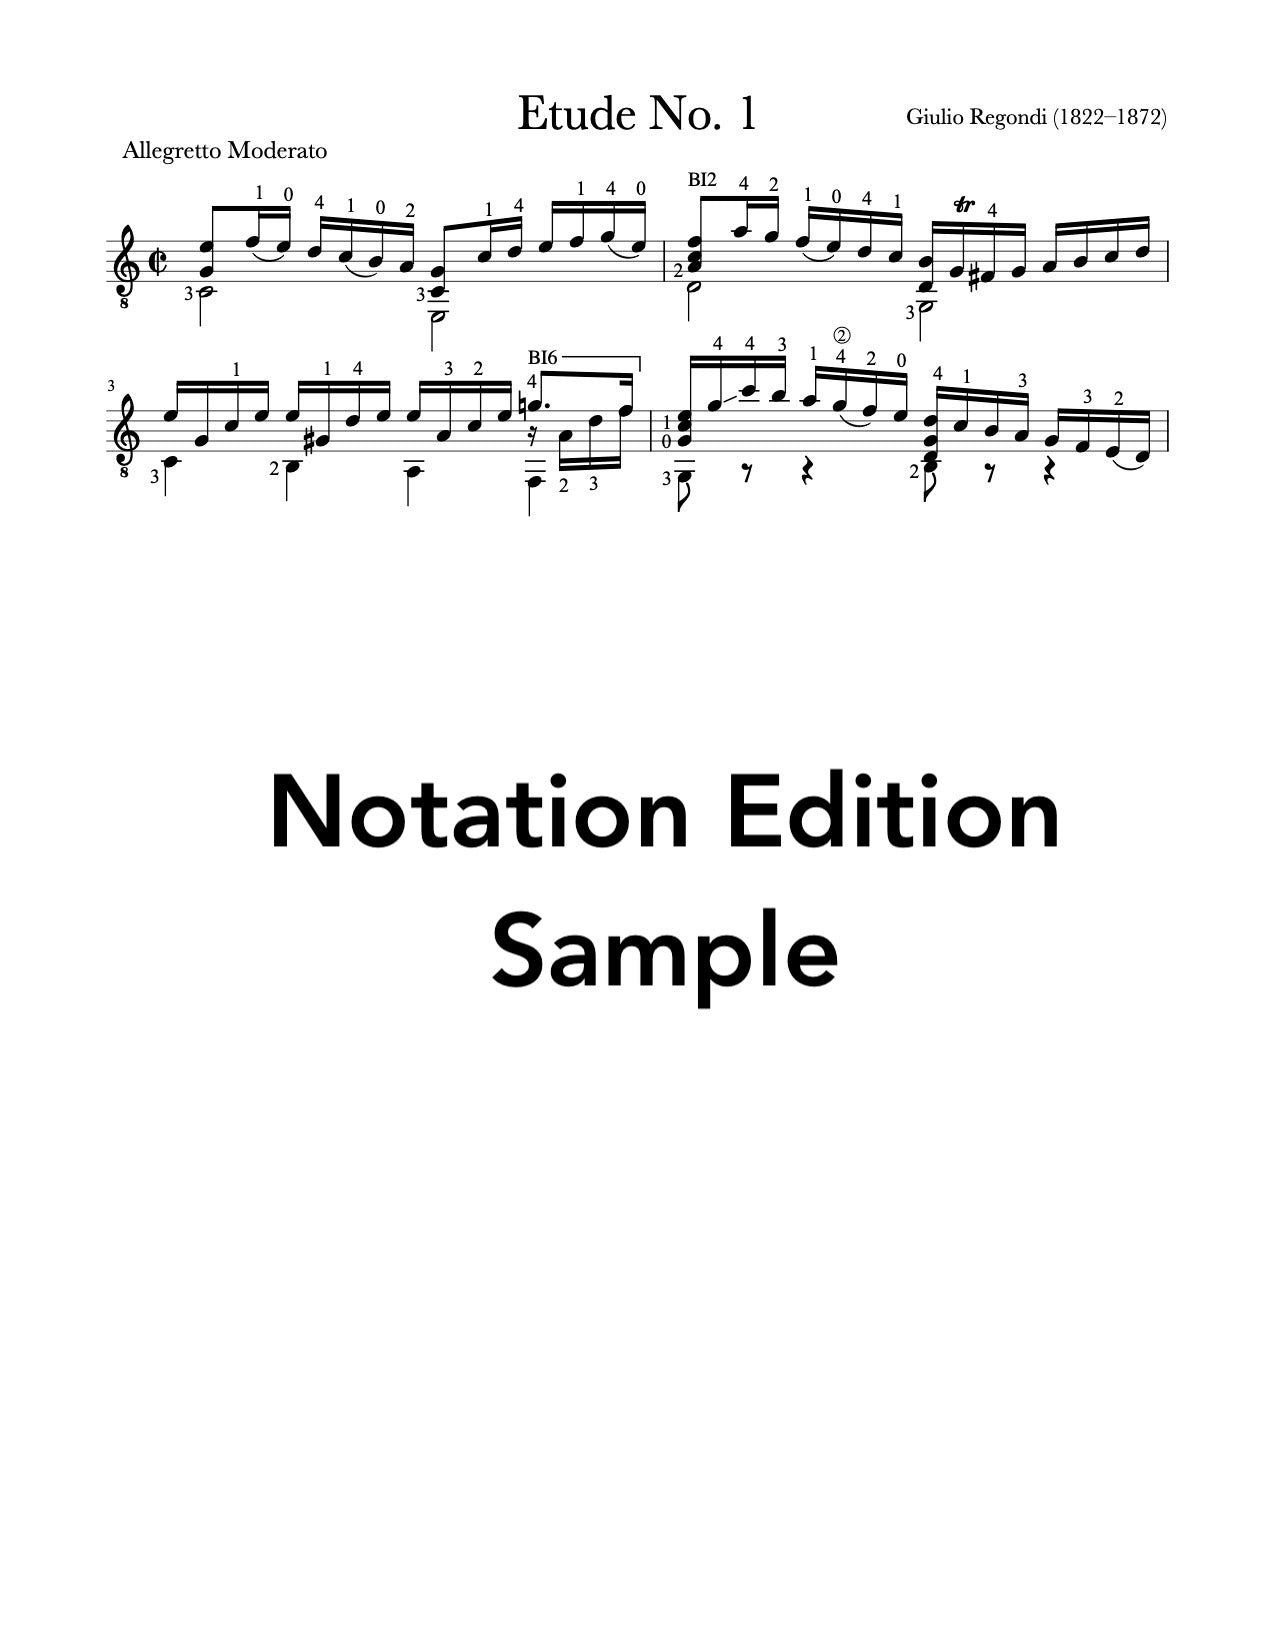 Etude No.1 by Giulio Regondi (PDF Sheet Music Sample)